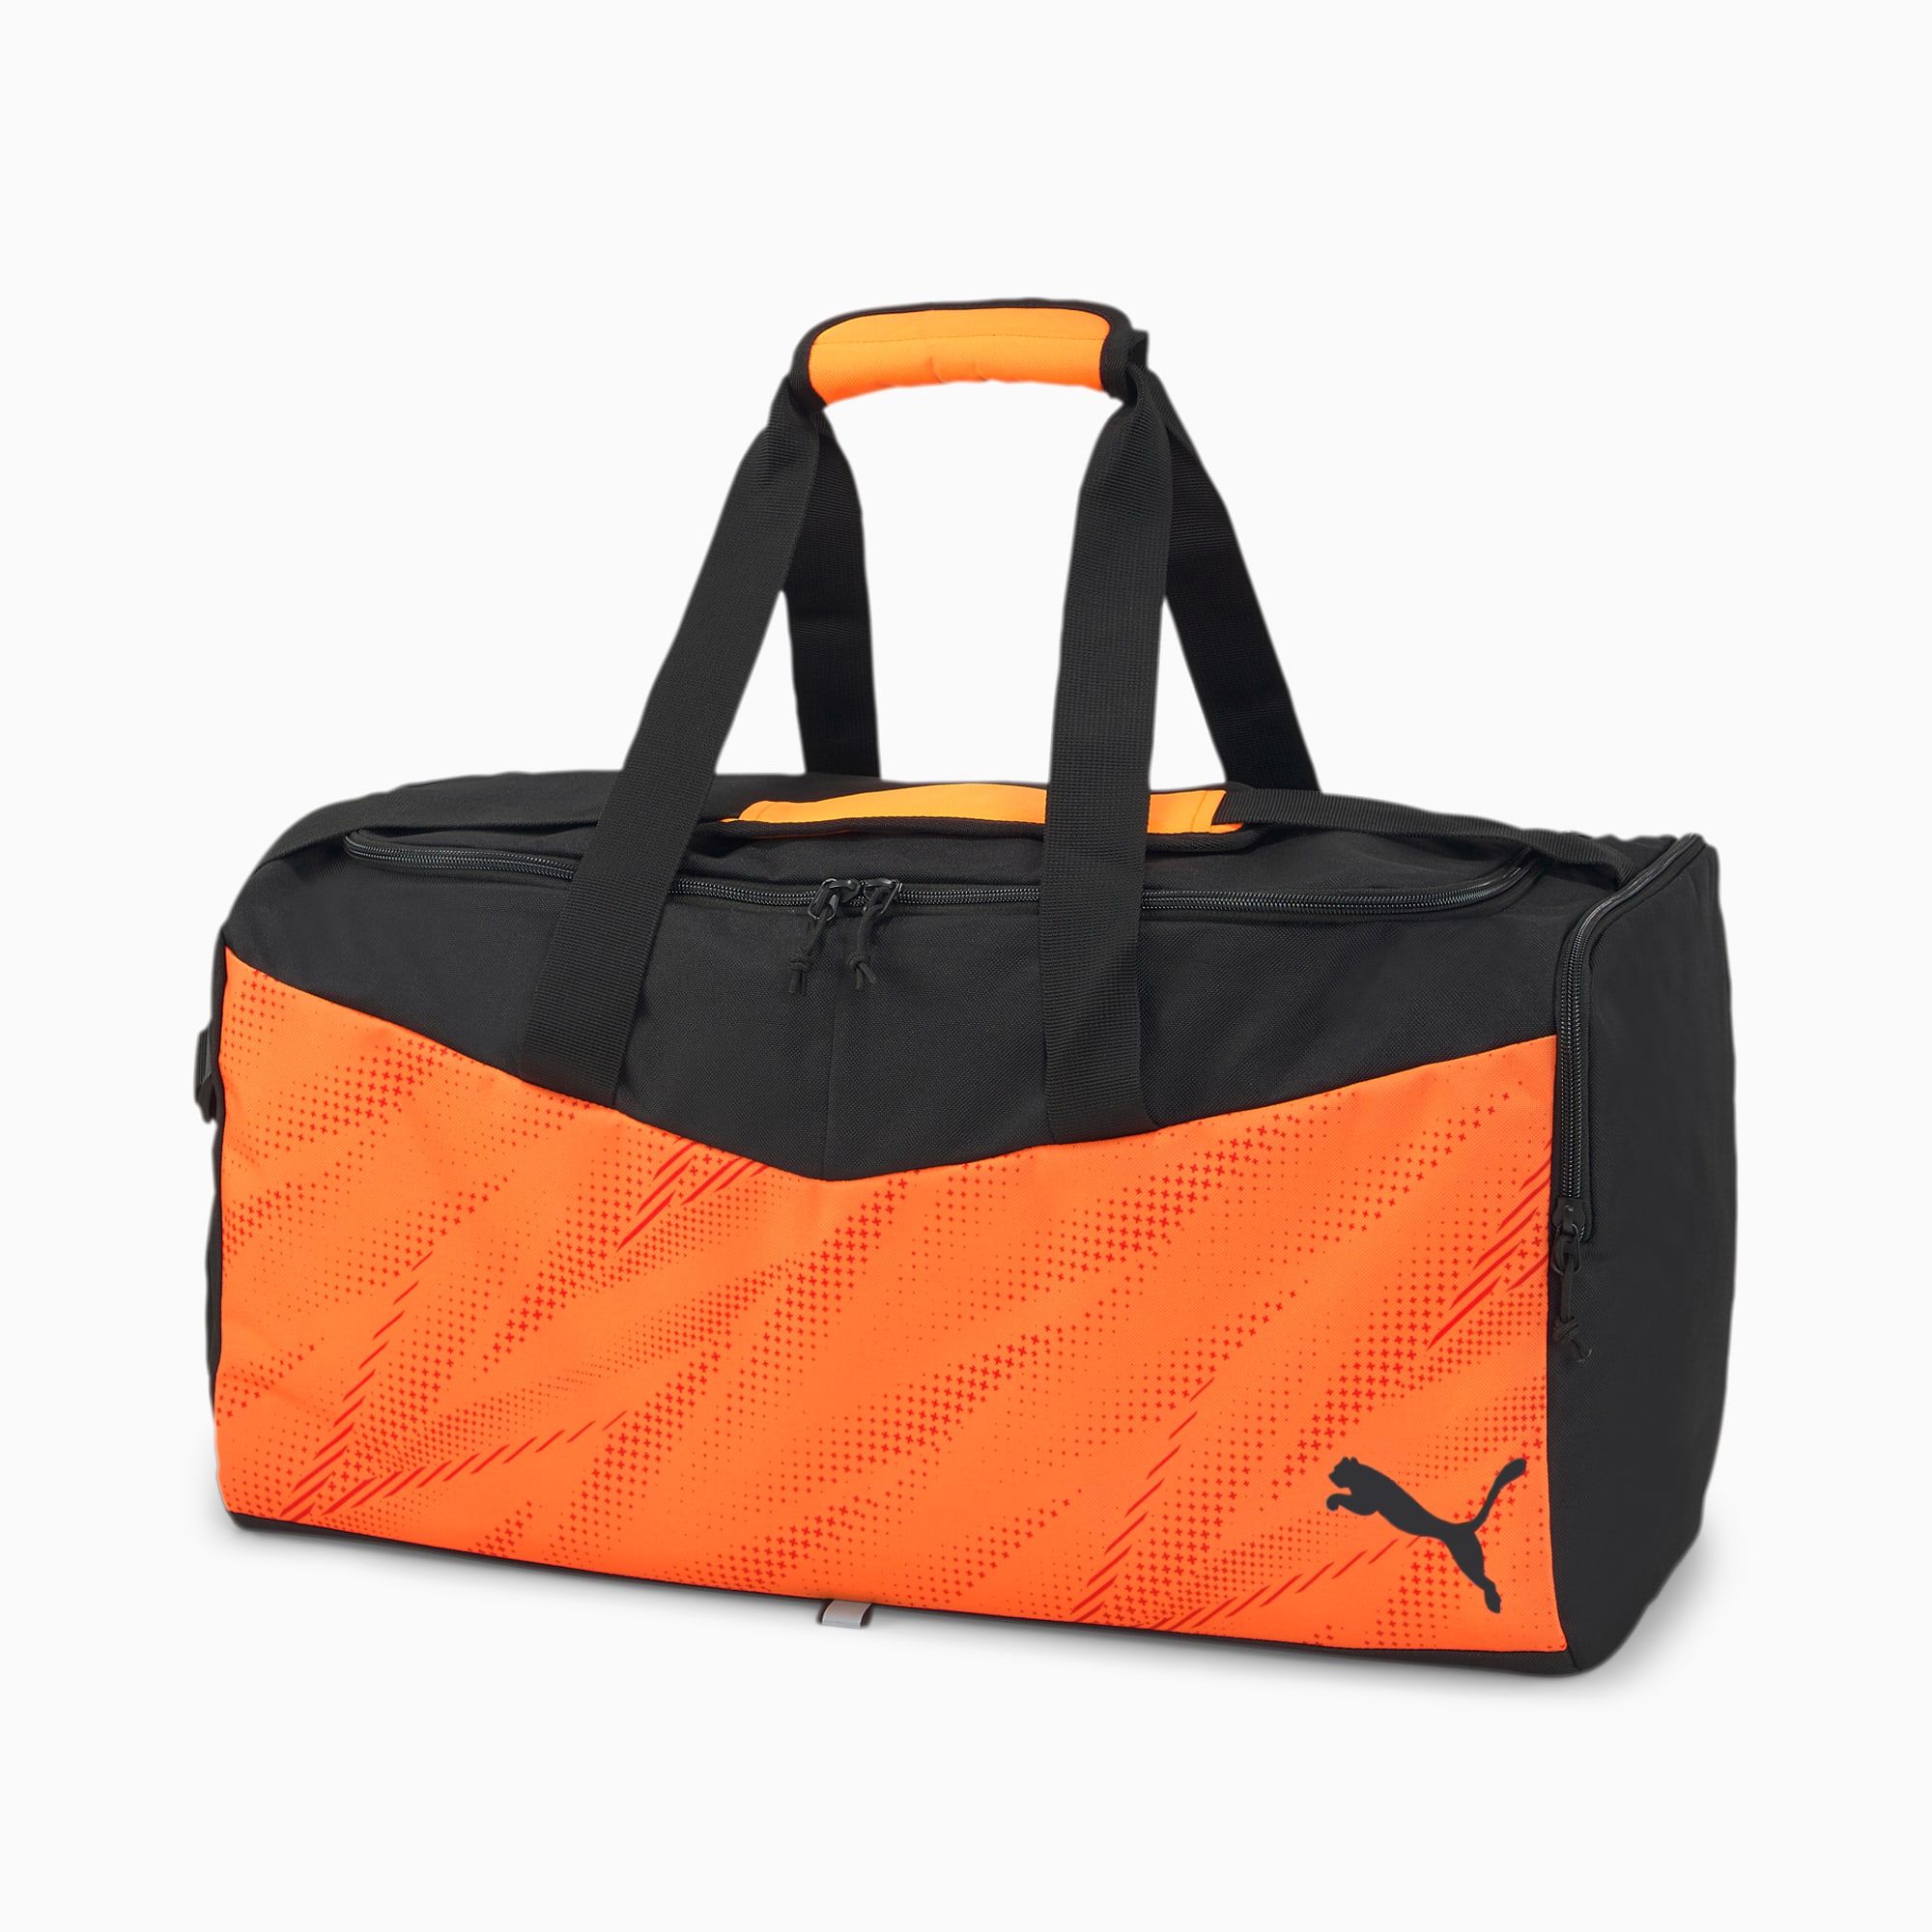 individualRise Medium Duffel Bag | PUMA Shop All Puma | PUMA